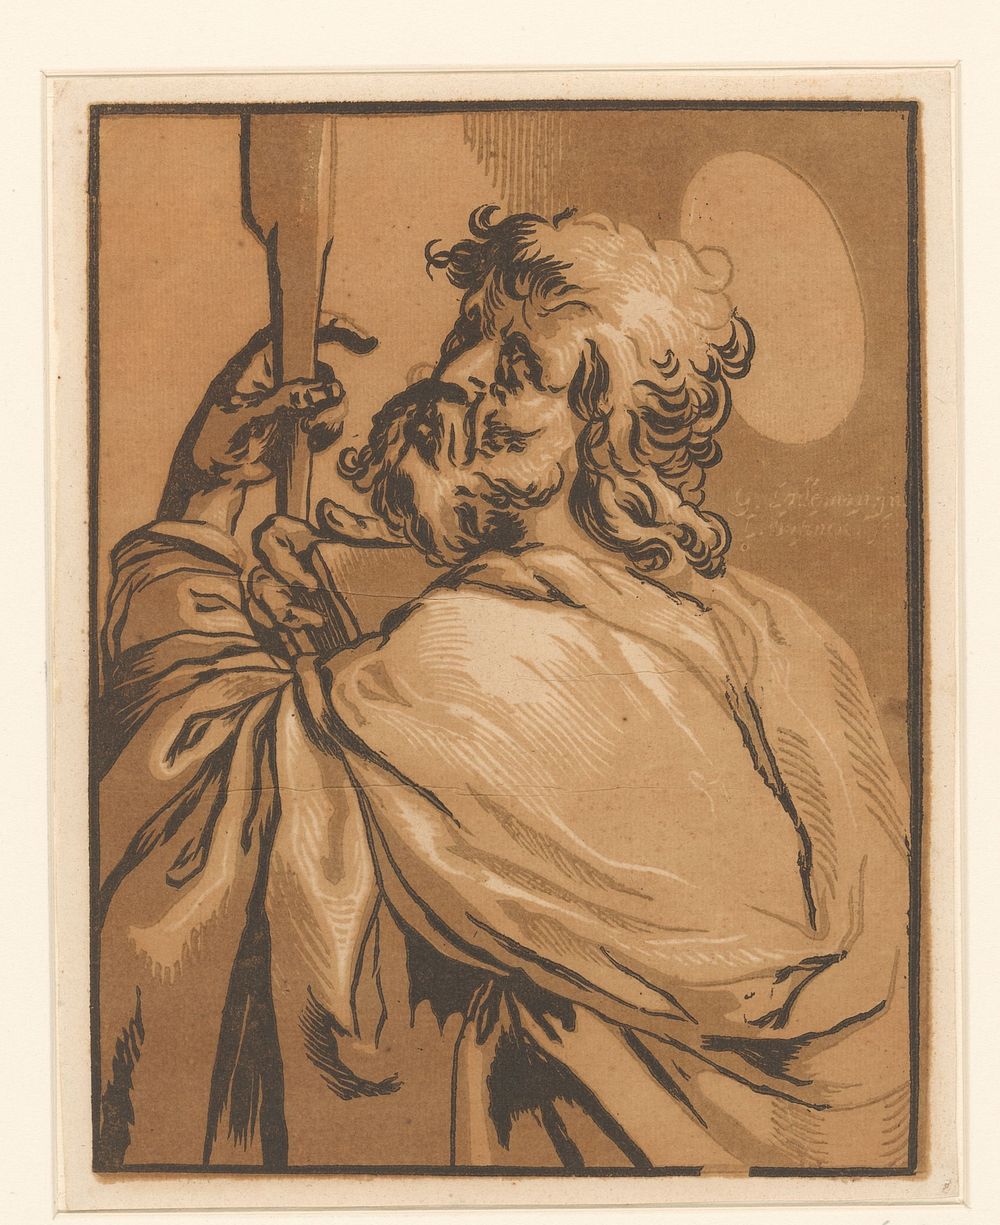 Apostel Jakobus de Mindere (1600 - 1669) by Ludwig Büsinck, Georges Lallemand and Melchior Tavernier